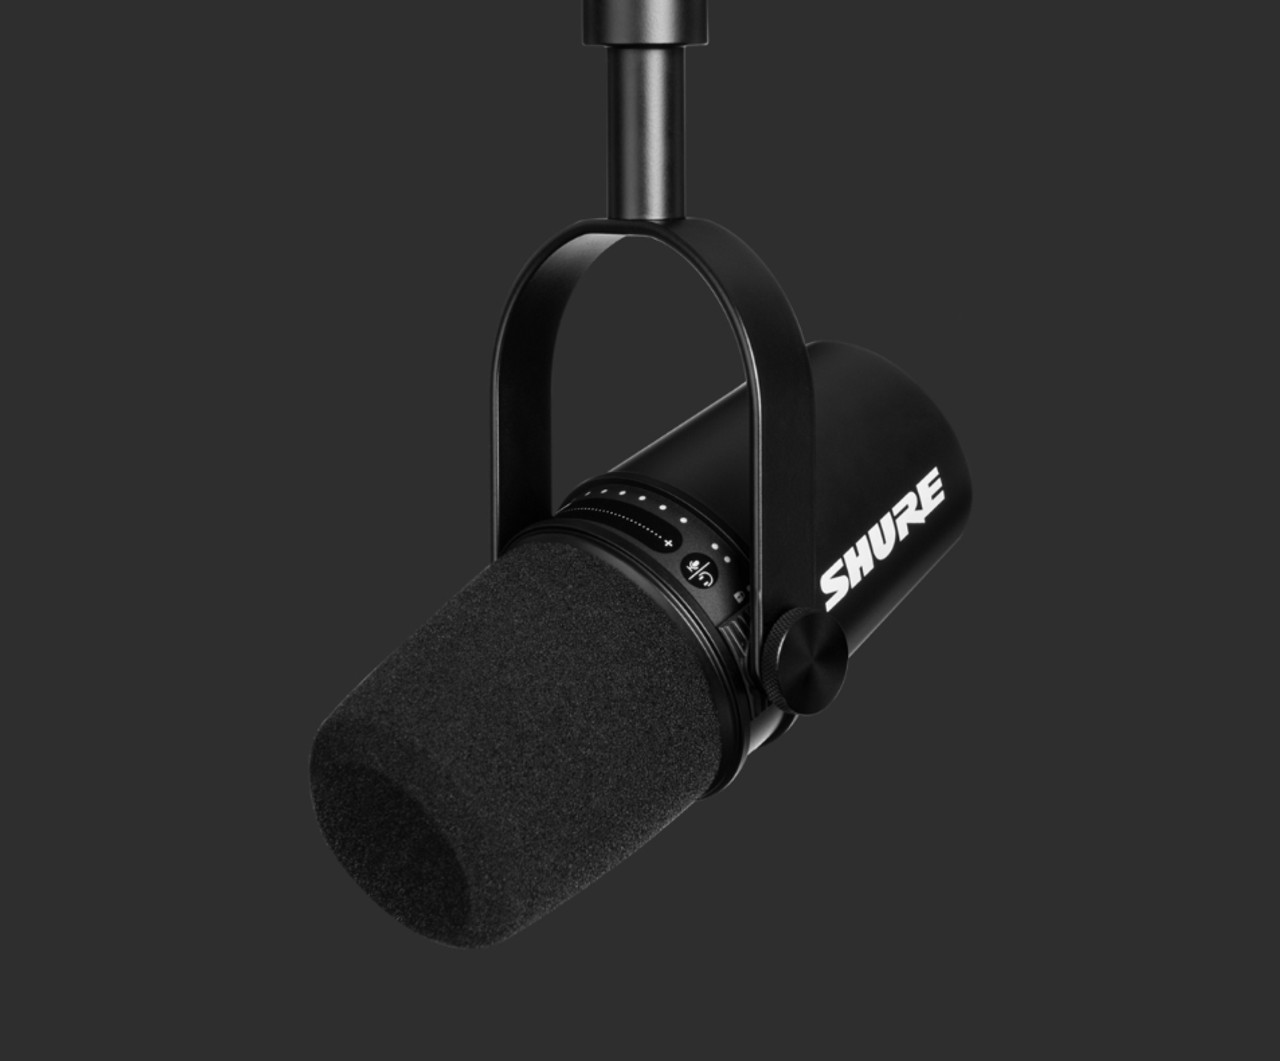 Shure MV7 Podcast Microphone Kit with Mini Tabletop Tripod